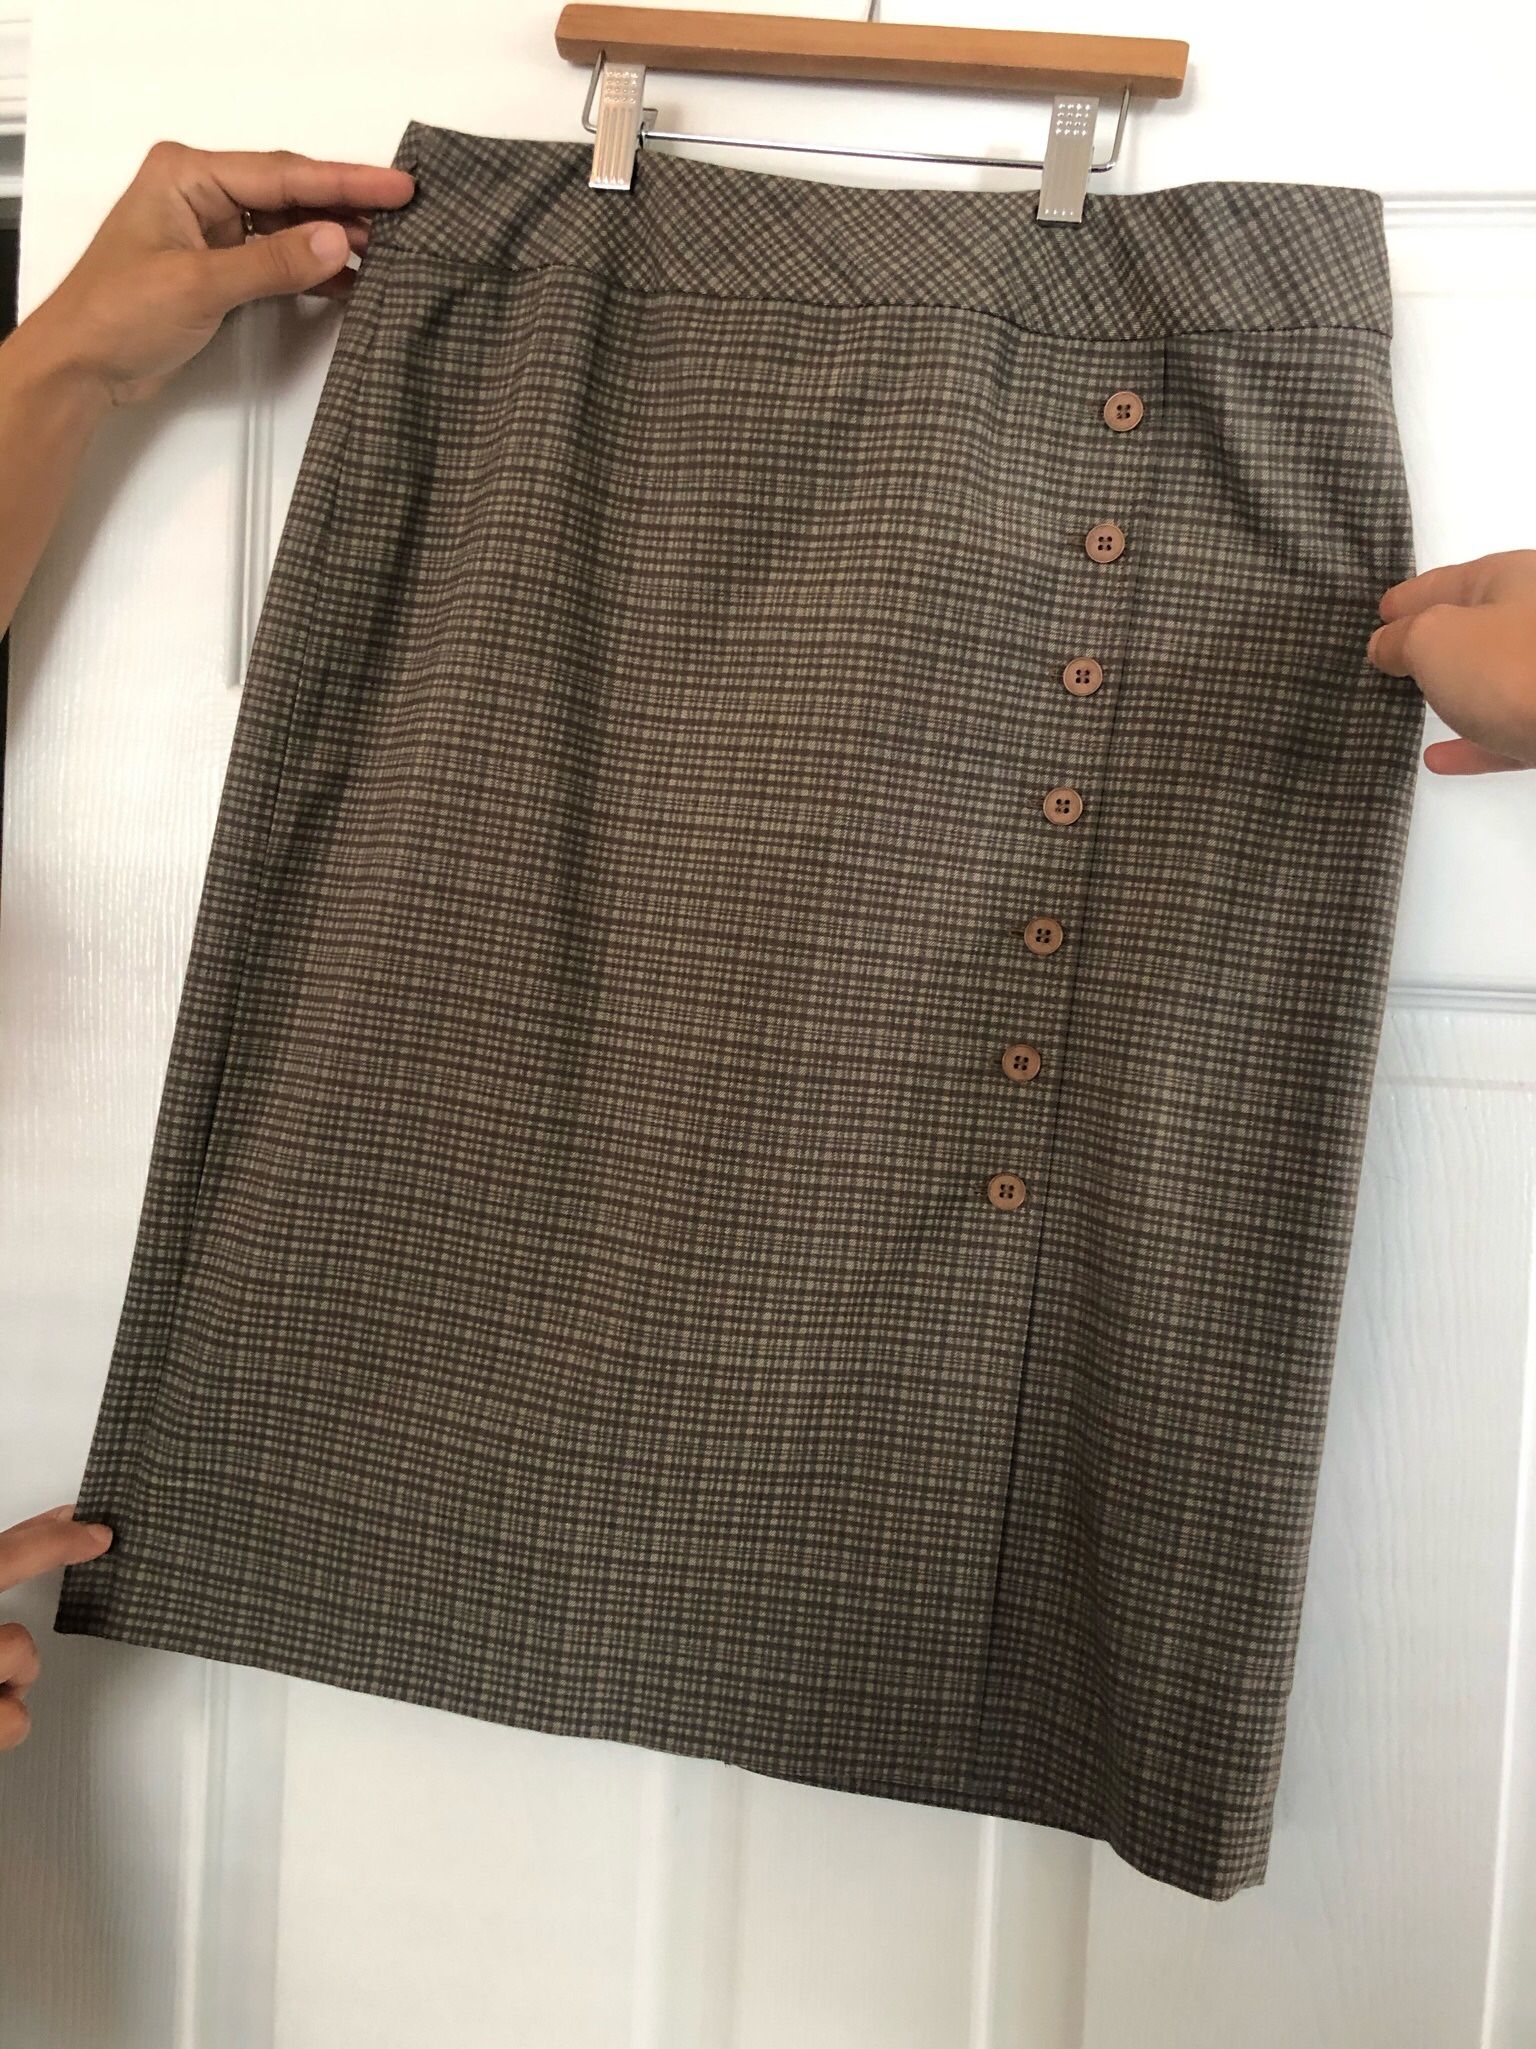 Jones New York Plaid Pencil Skirt - New With Tags